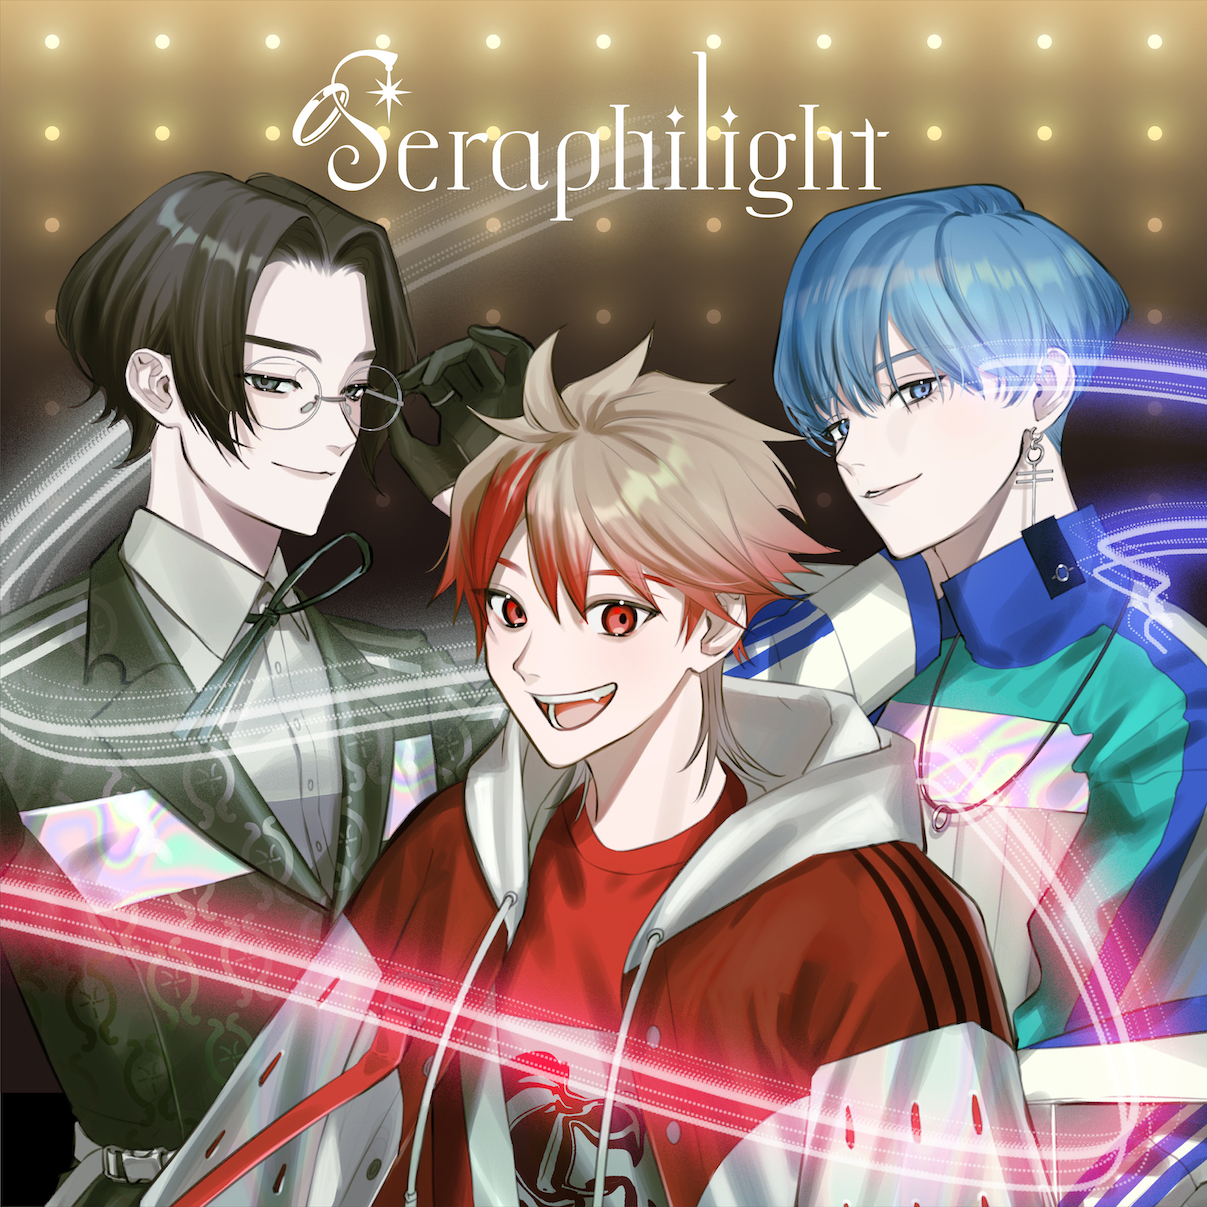  Seraphilight 1st Digital Single 「THE SERAPHILIGHT」 （C）HeavenlyHelly